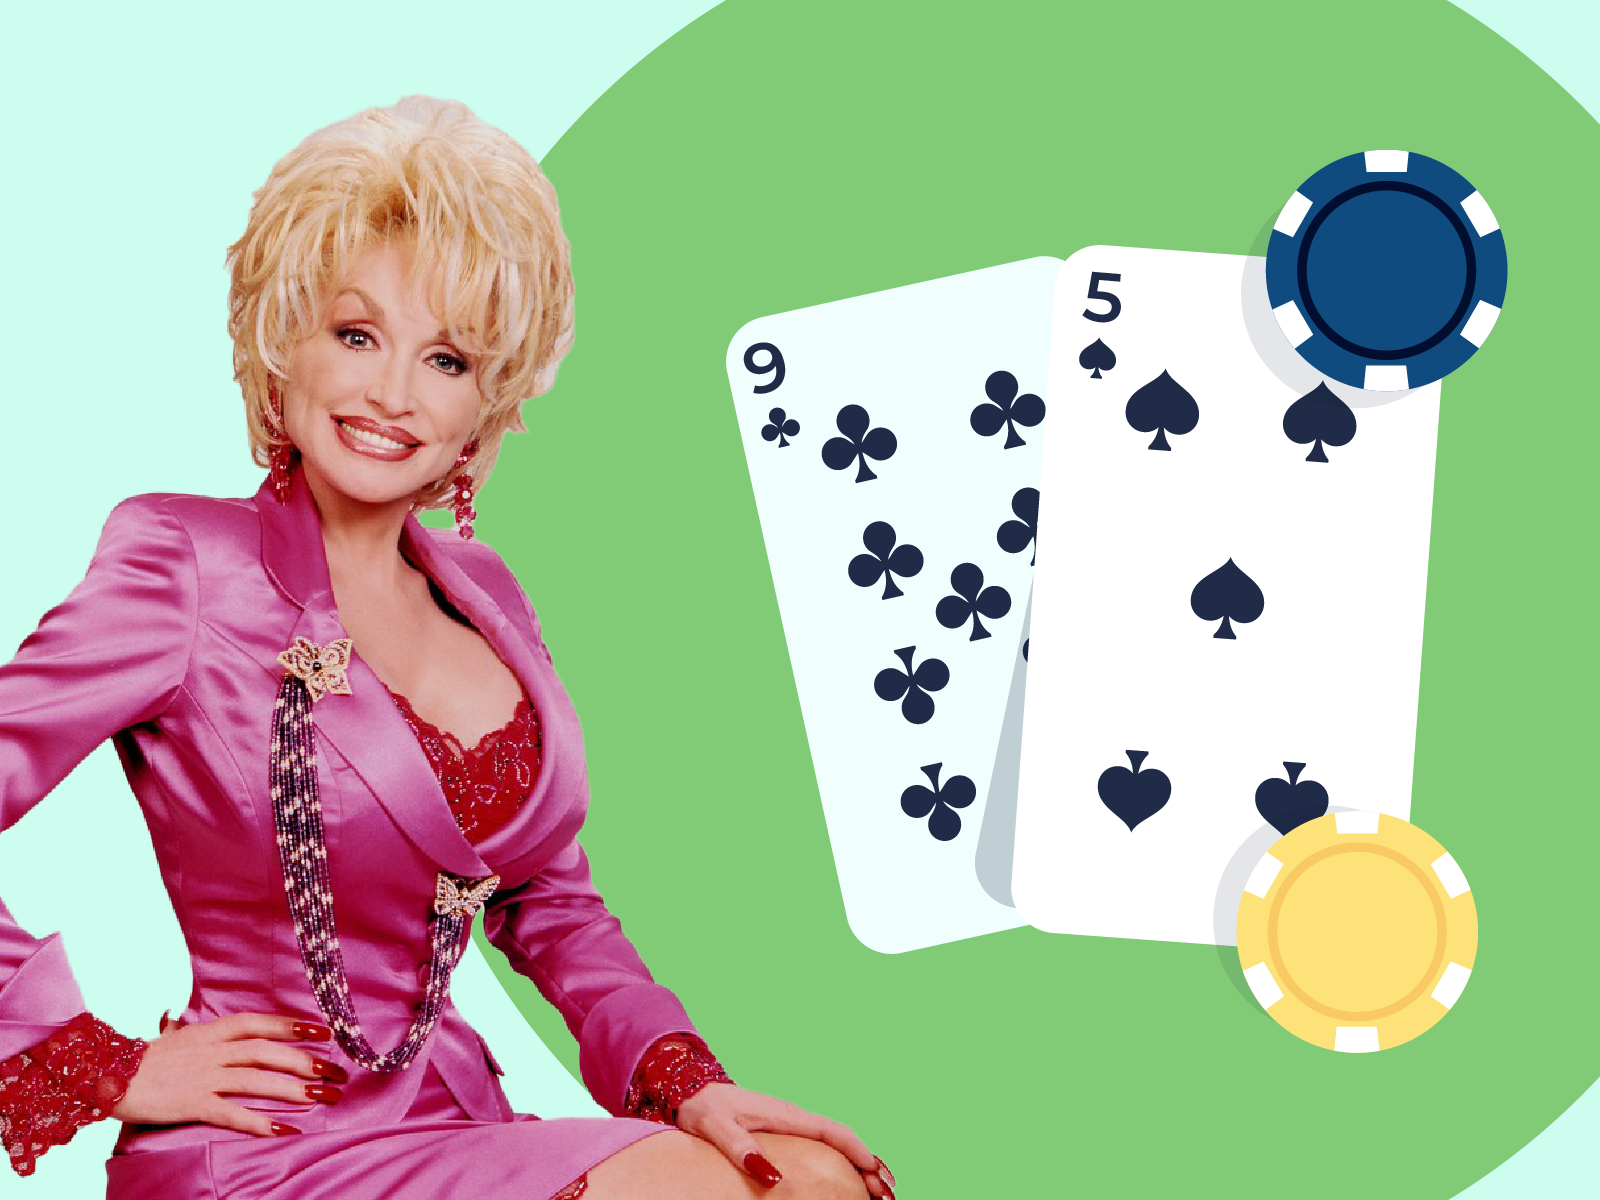 57 Poker Terms And Slang Phrases You Need To Know - Poker Slang & Phrases